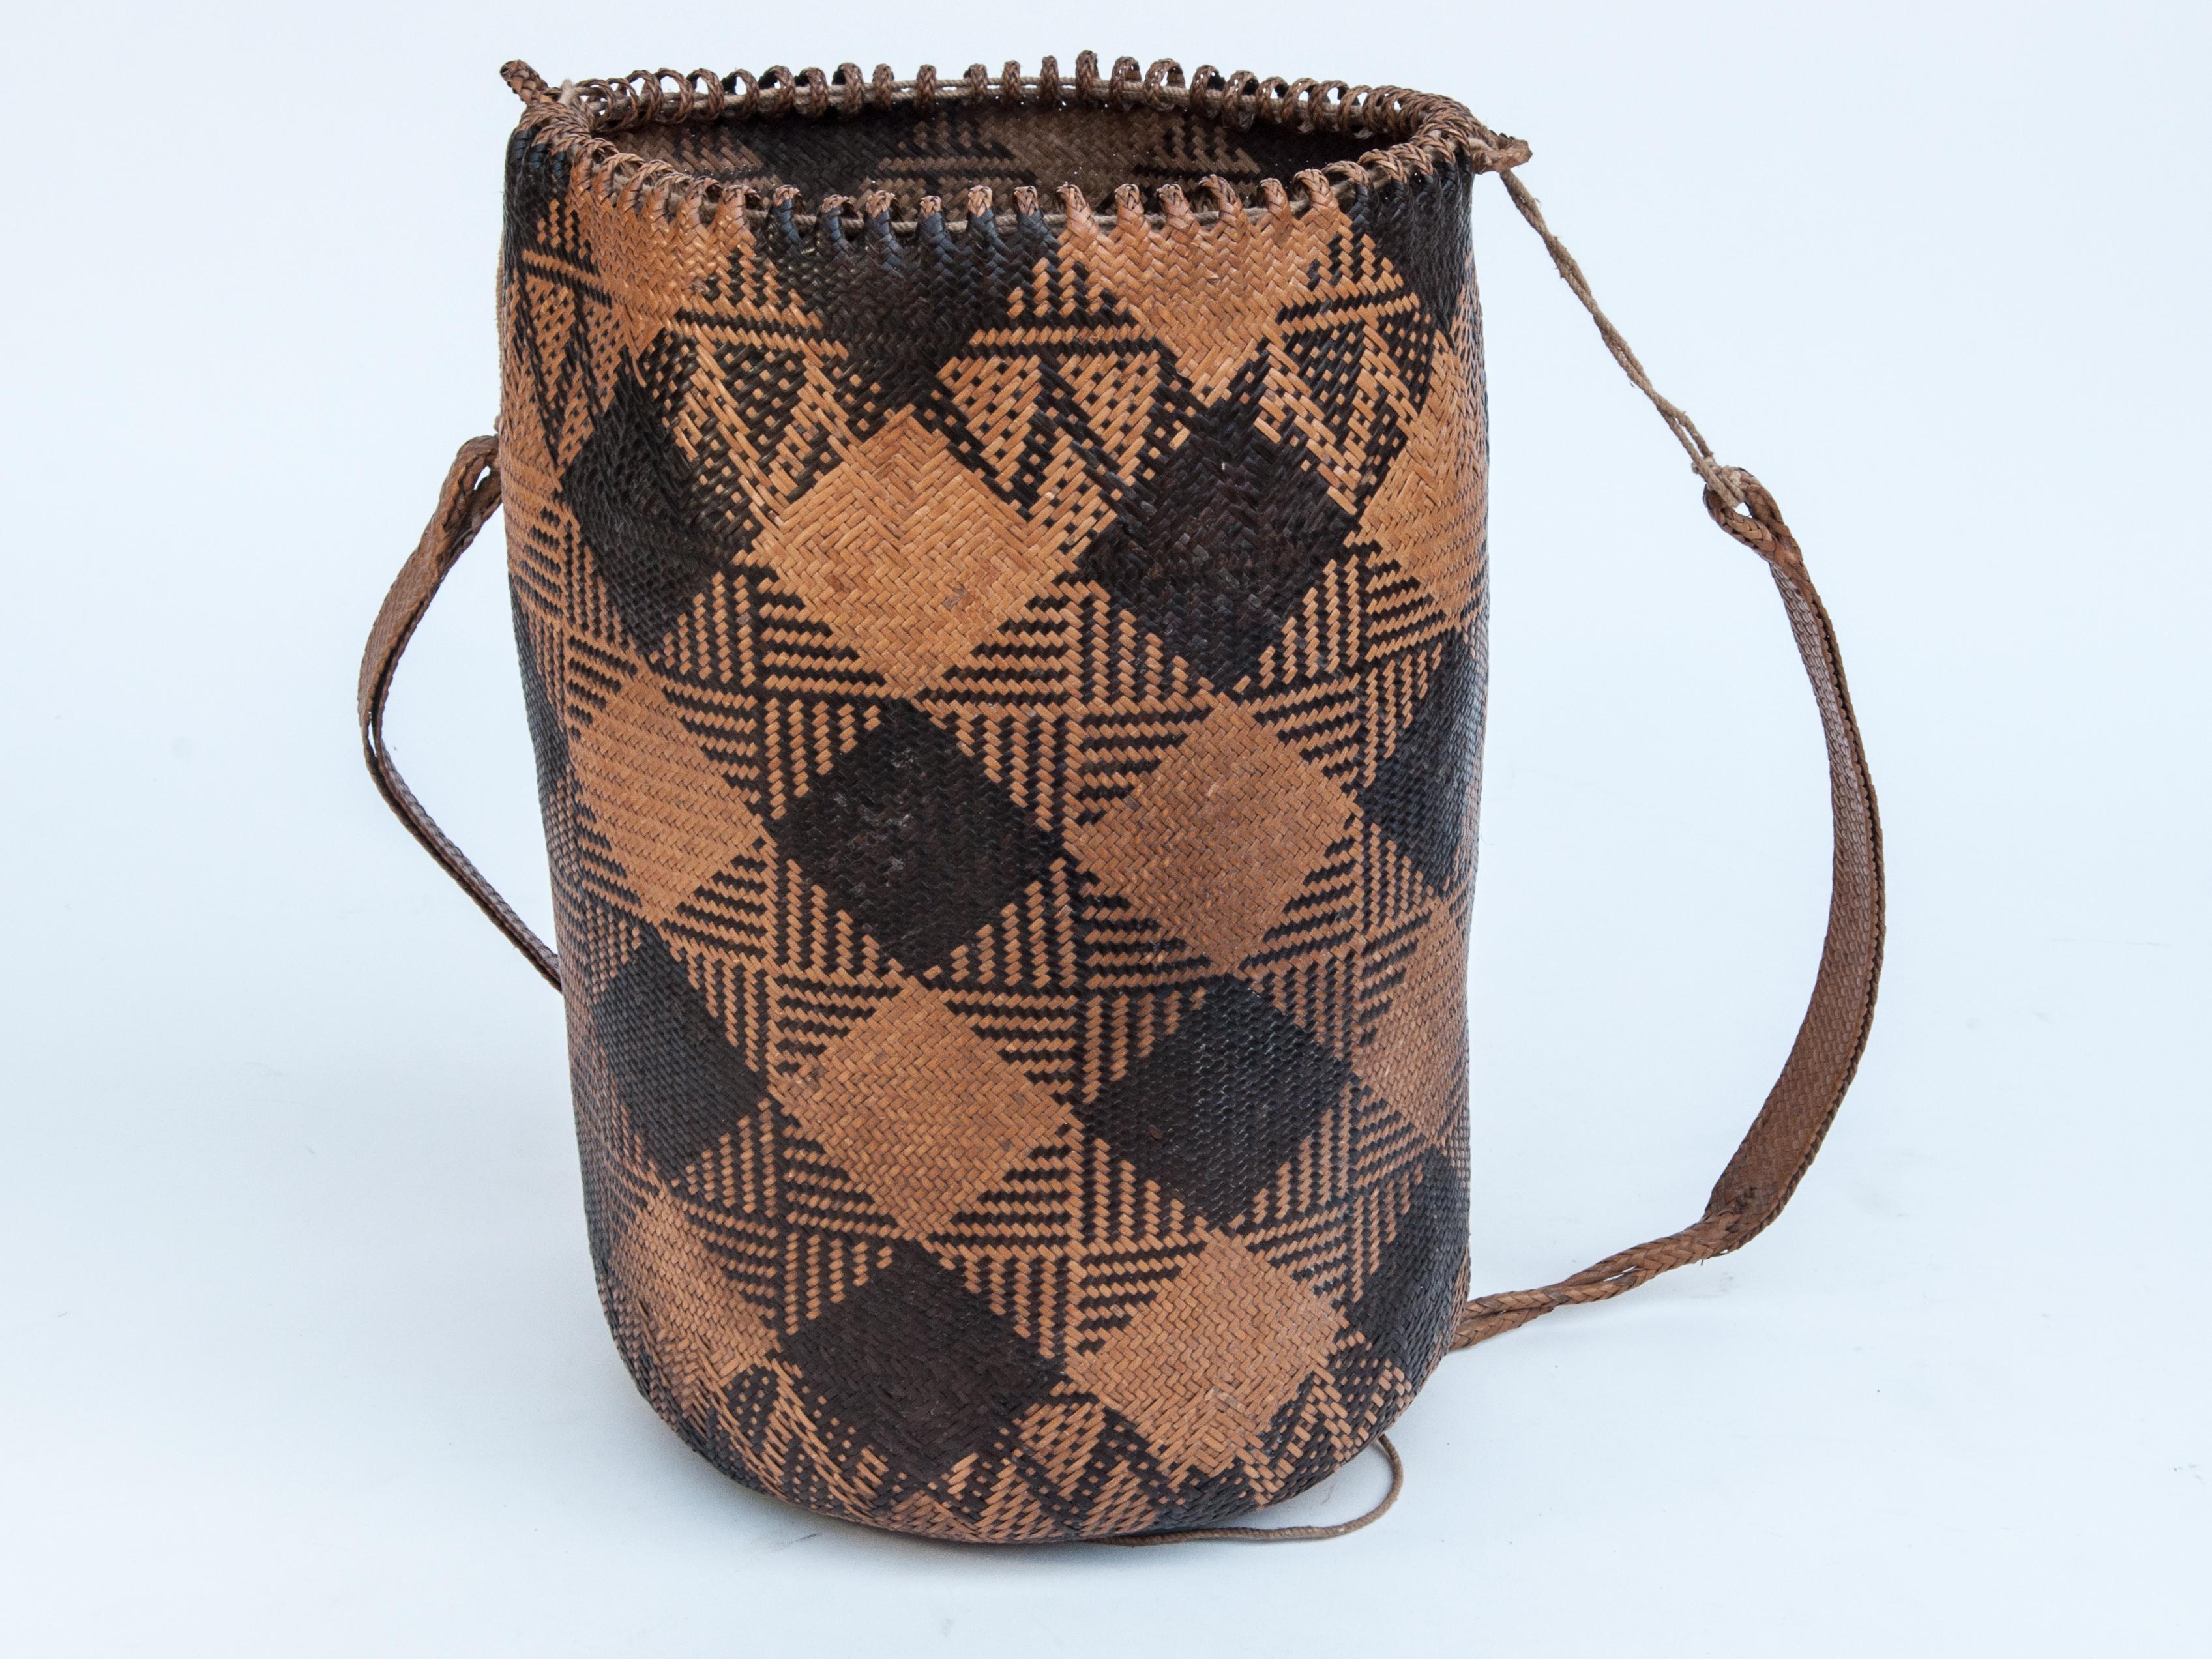 Indonesian Rattan Drawstring Shoulder Bag Basket, Dayak of Borneo, Late 20th Century